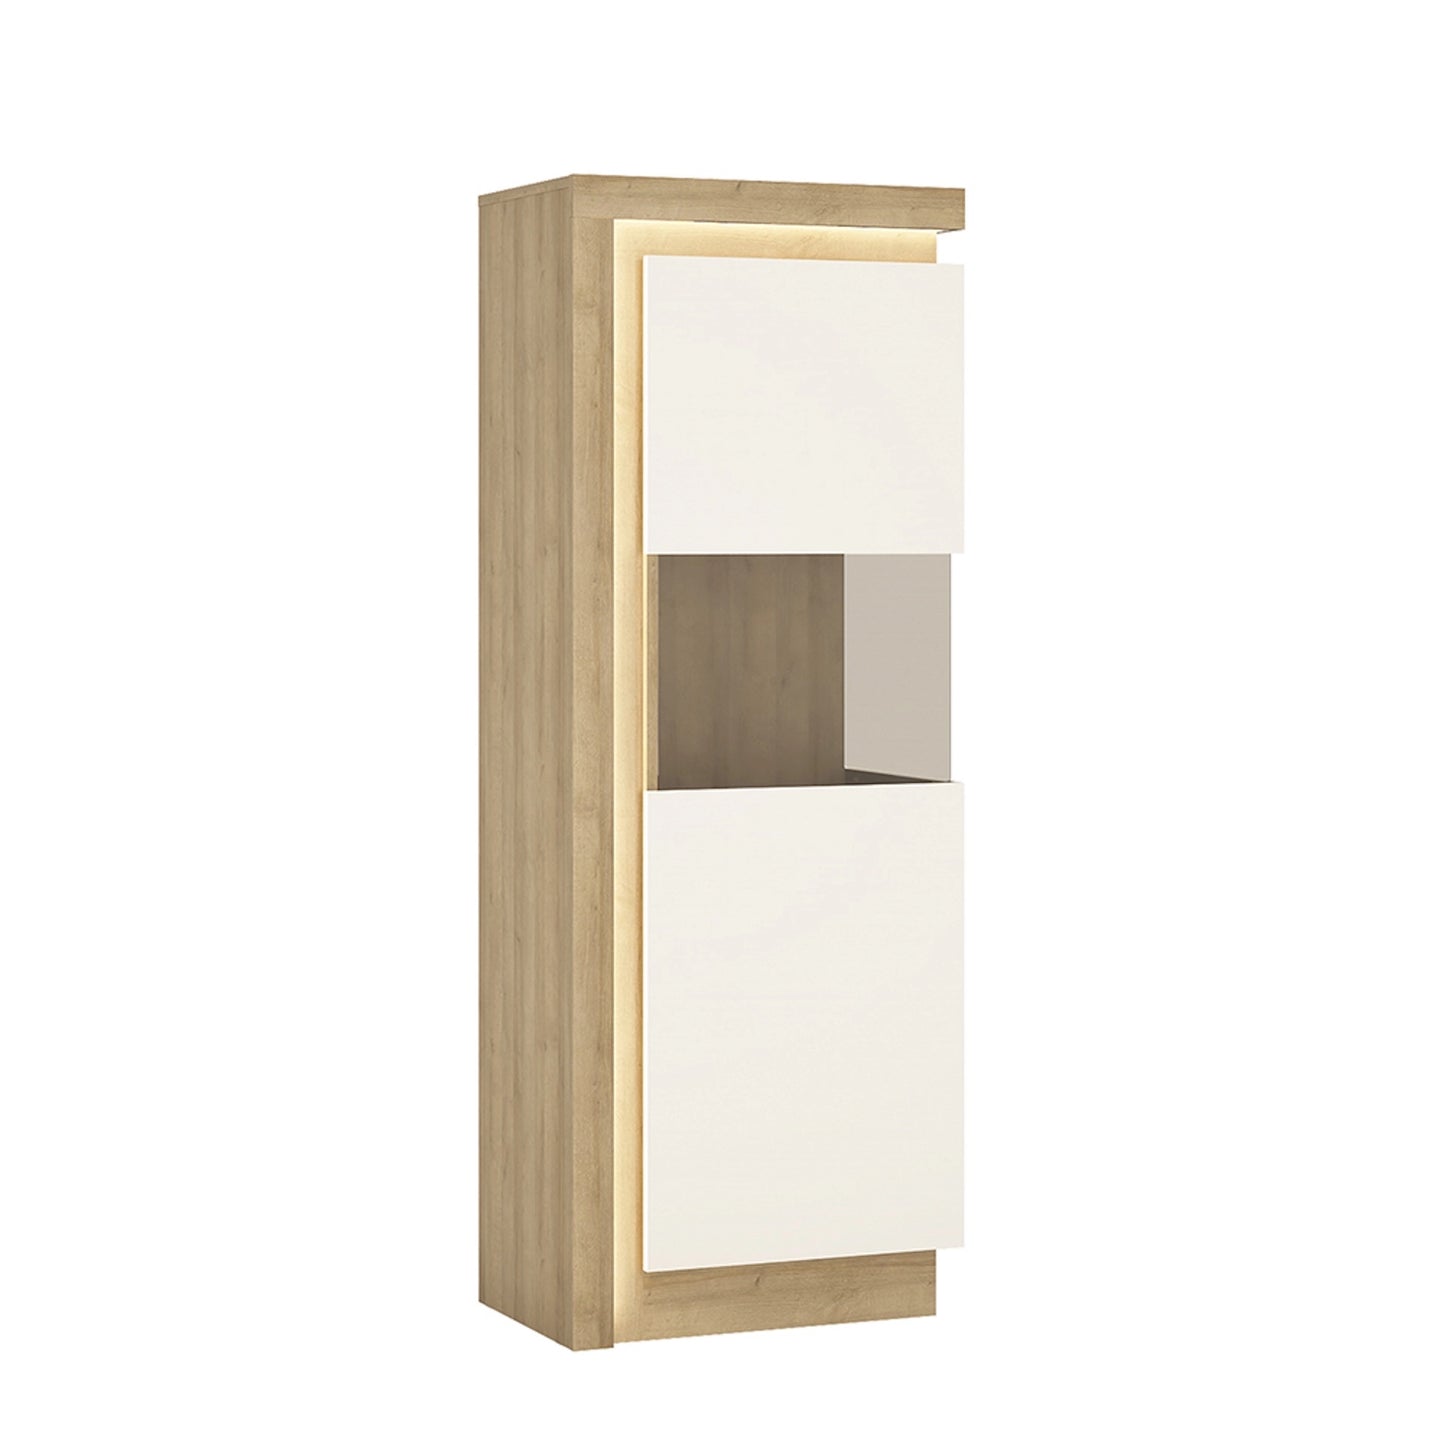 Furniture To Go Lyon Narrow Display Cabinet (RHD) 164.1cm High in Riviera Oak/White High Gloss